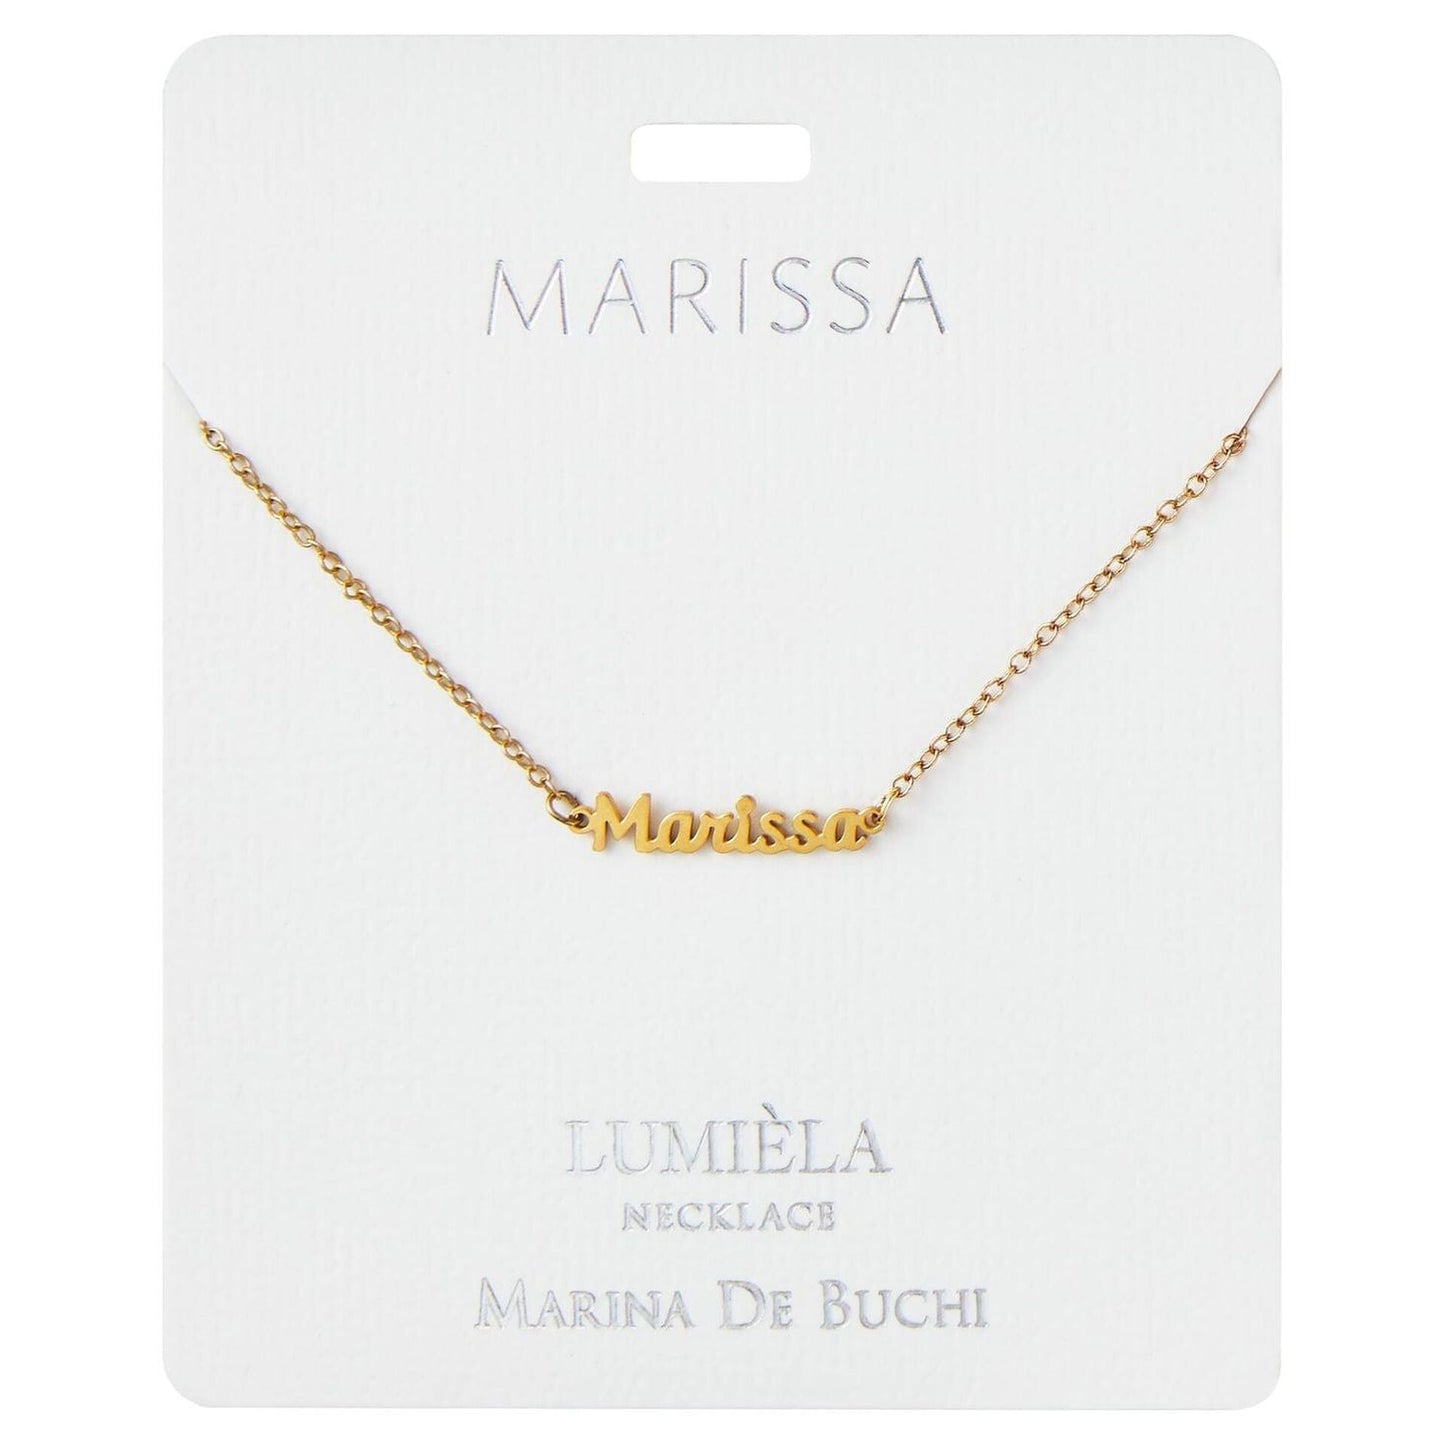 Lumiela Personalized Nameplate Mackenzie Necklace in Gold Tone